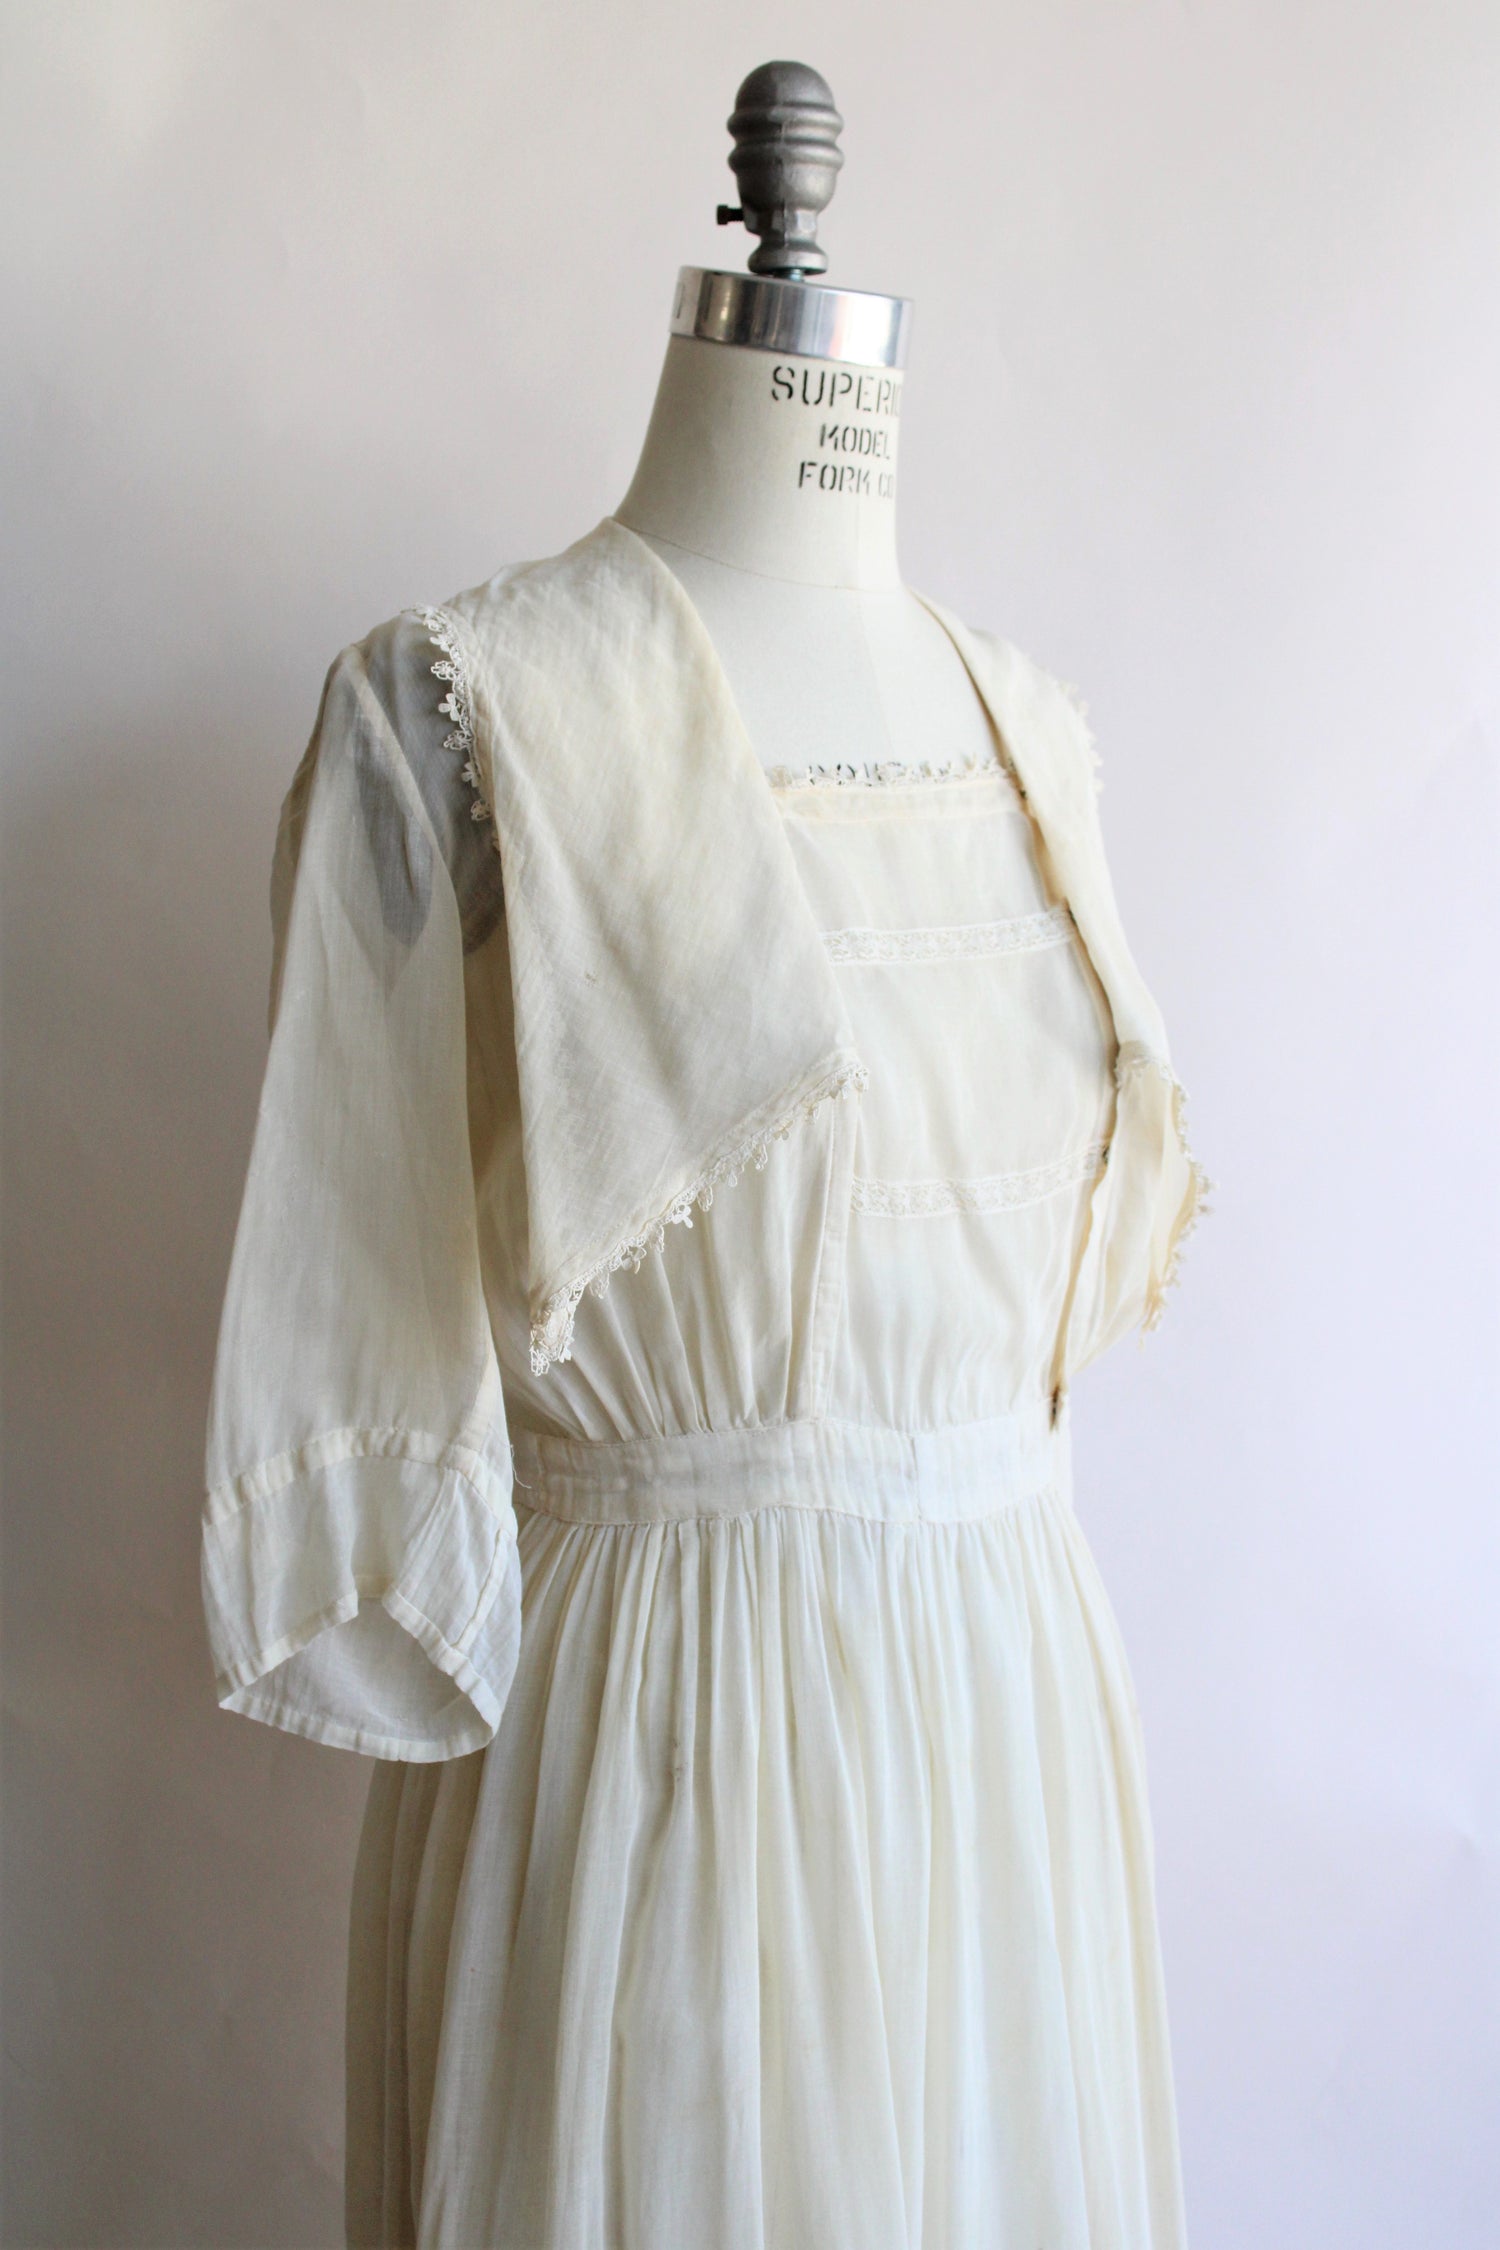 Antique Edwardian Cotton Dress in Pale Ivory